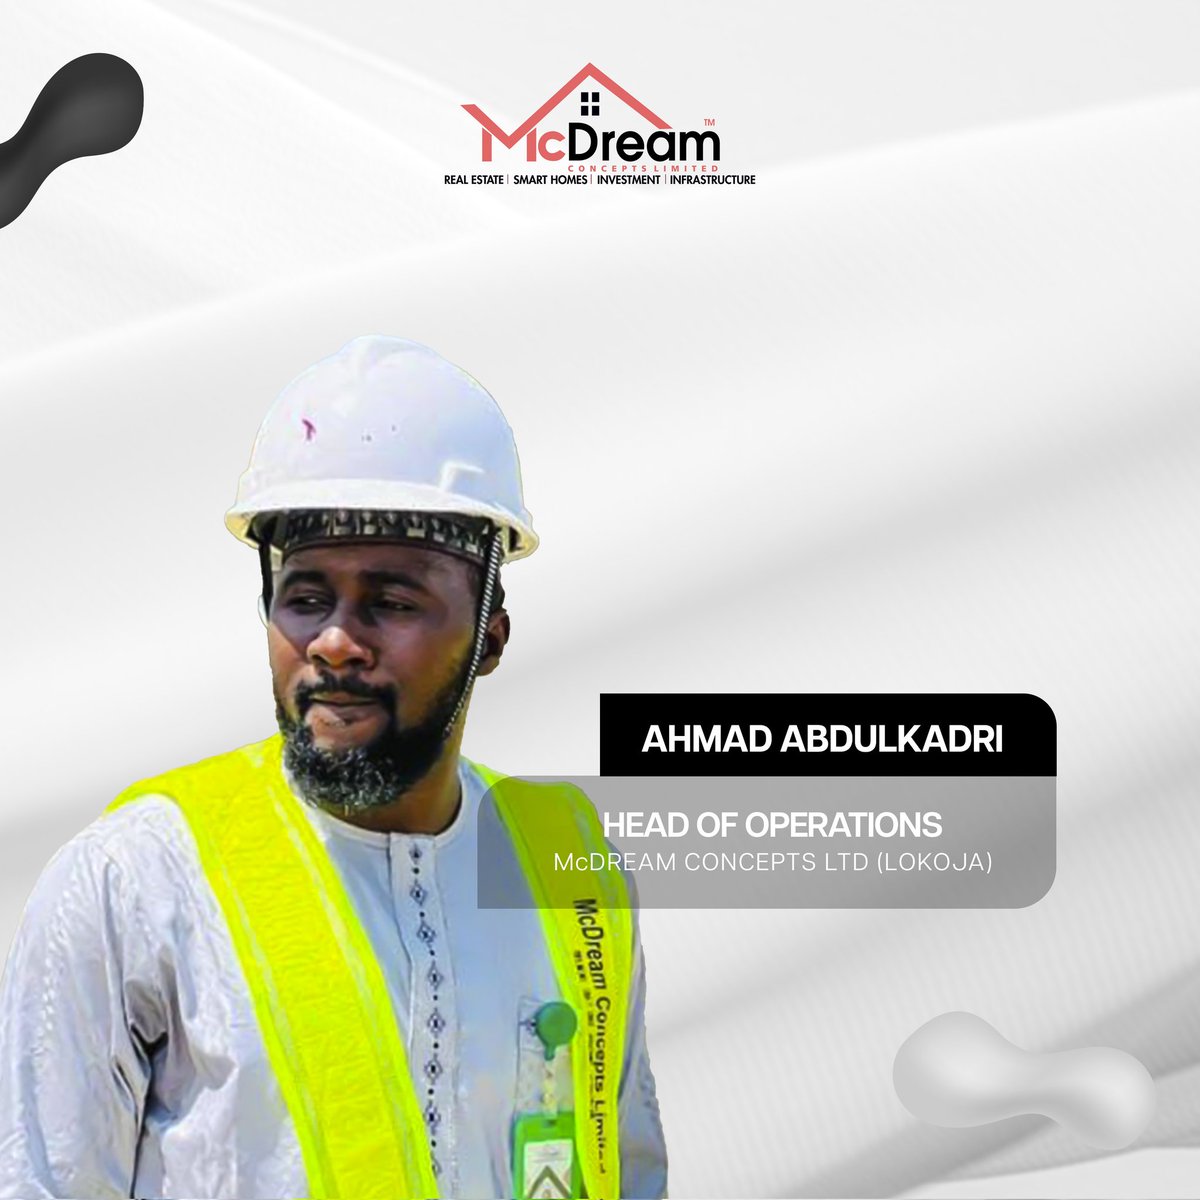 Exciting news! Introducing Ahmad Abdulkadri, our brilliant Head of Technical at McDREAM Concepts Limited in Lokoja! #HeadofTechnical #TechGuru #InnovationLeader #TeamMcDREAM #Lokoja #TechRevolution #DreamBig #DigitalTransformation #GameChanger #InspiringMinds #DrivenByInnovation